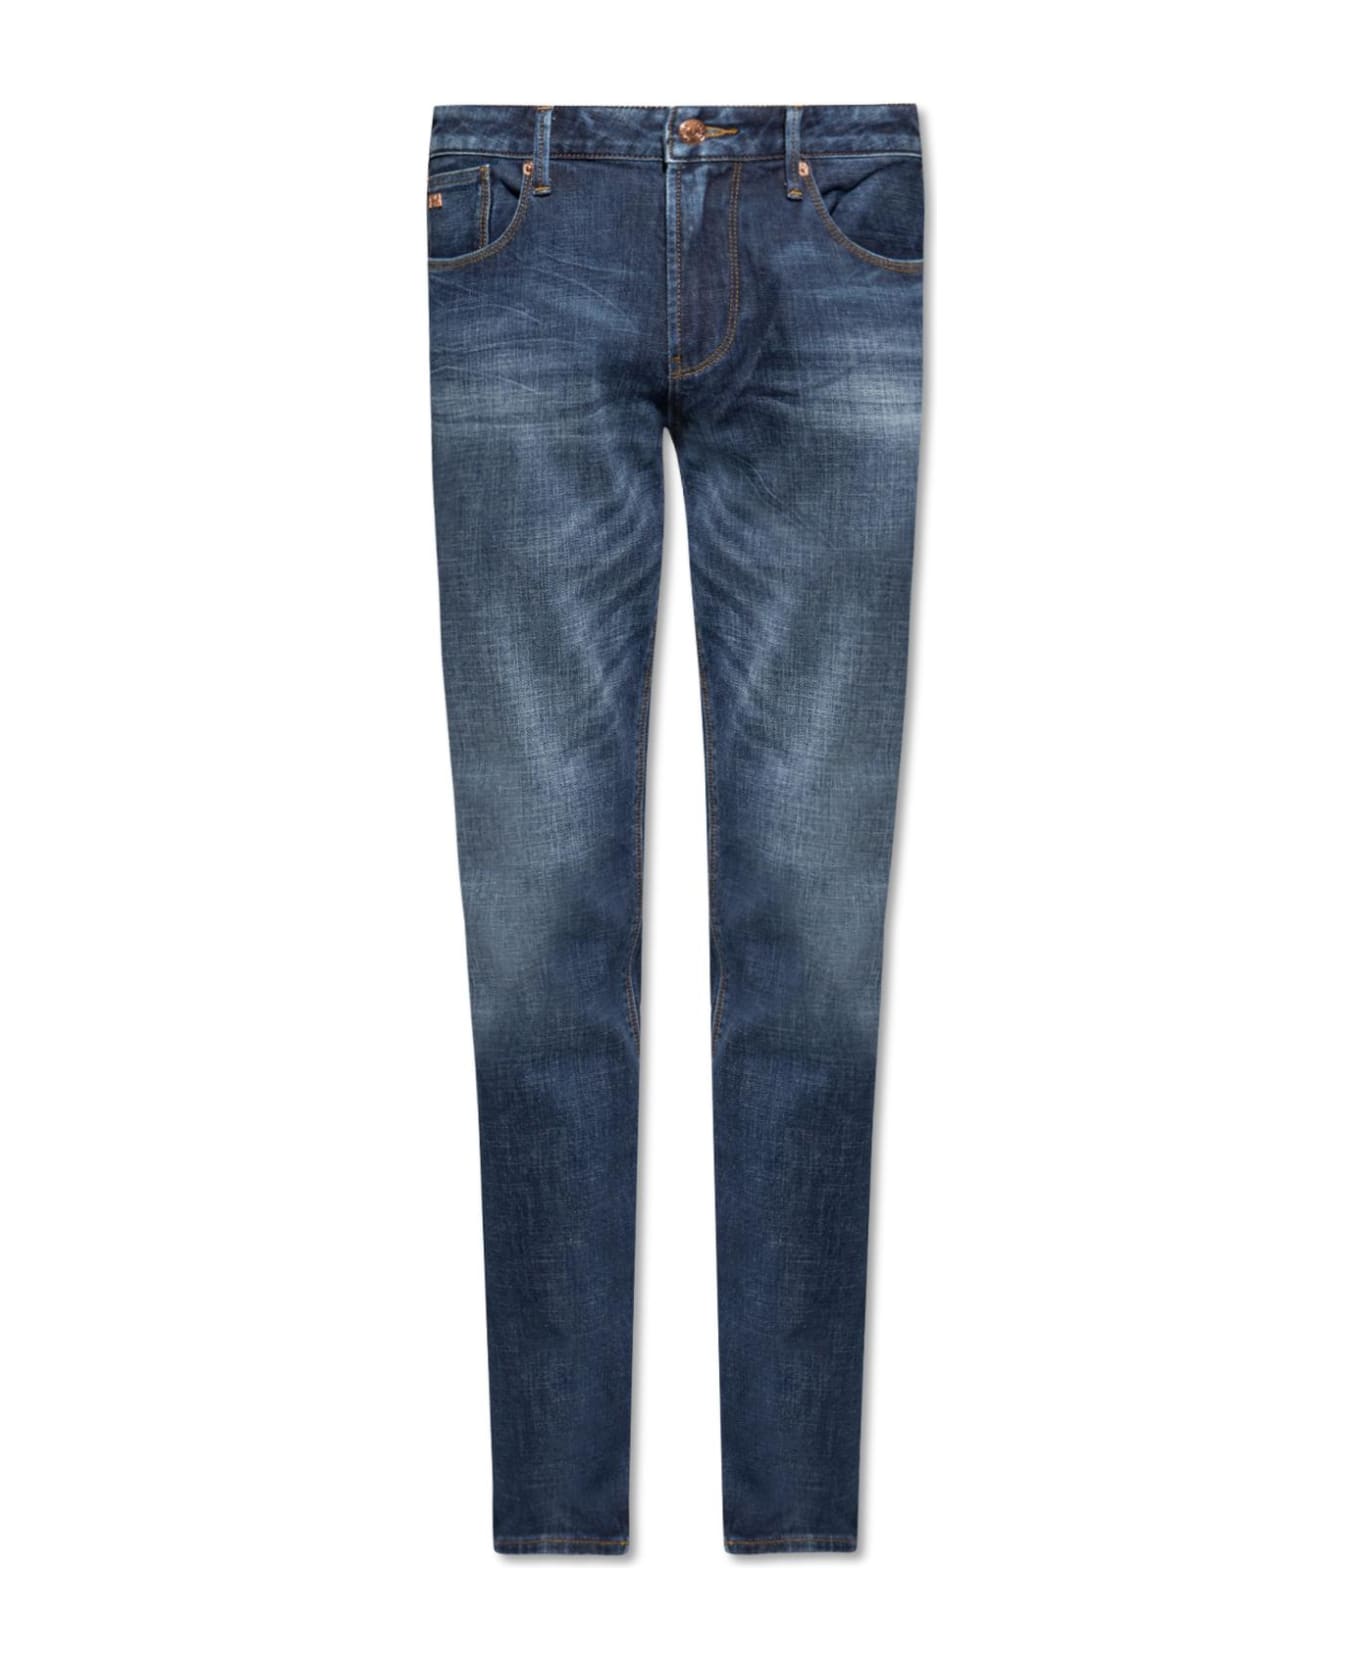 Emporio Armani 'j06' Slim Fit Jeans - Denim blu デニム